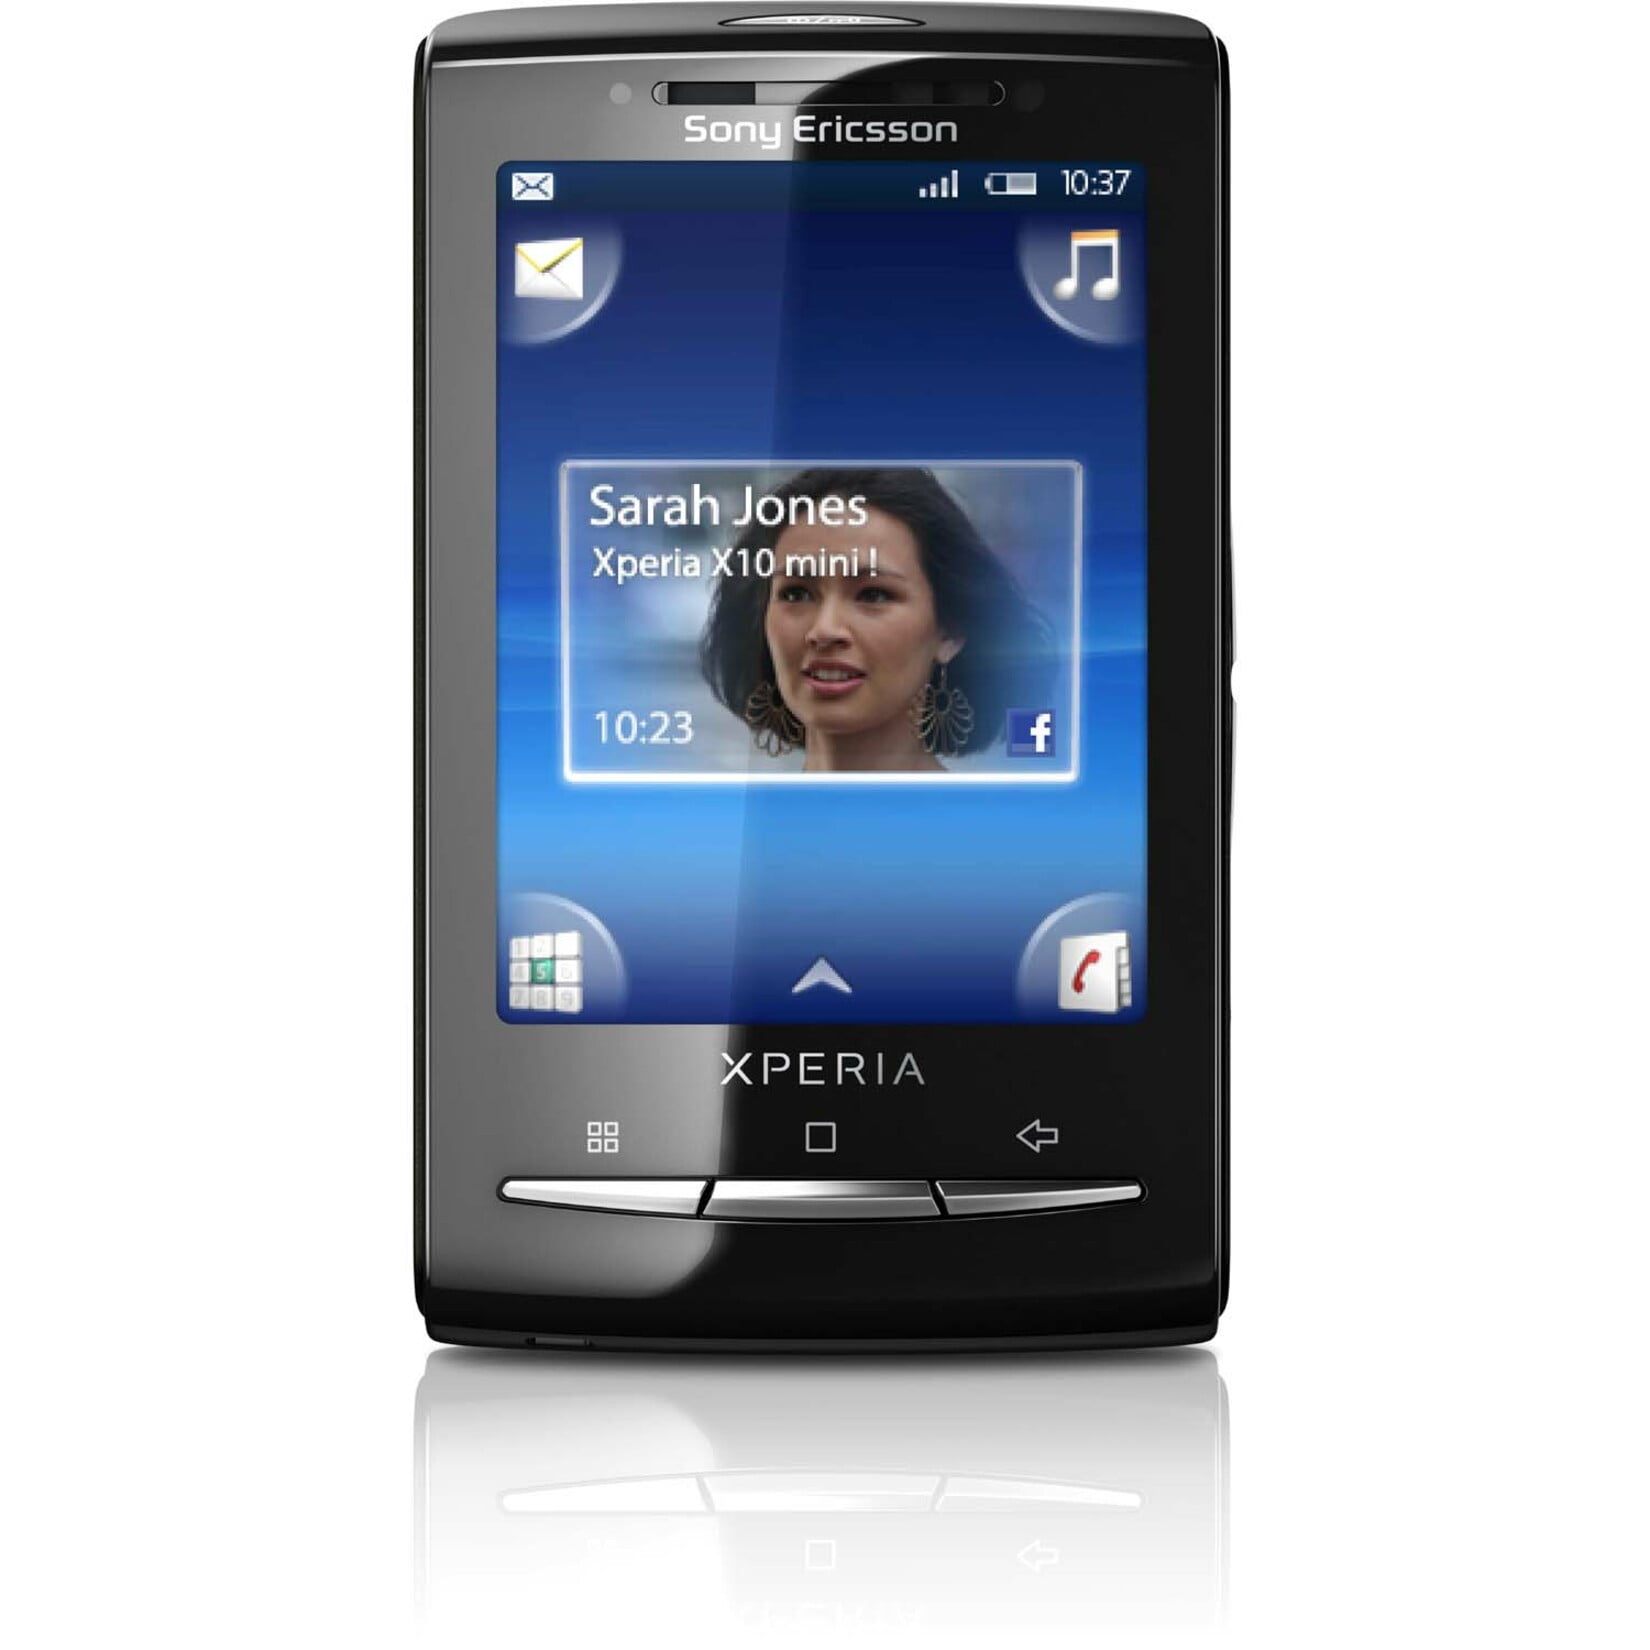 Sony Mobile Sony XPERIA X X10 mini MB Smartphone, LCD 240 x 320, 600 MHz, Android 1.6 Donut, 3.5G, Black - Walmart.com